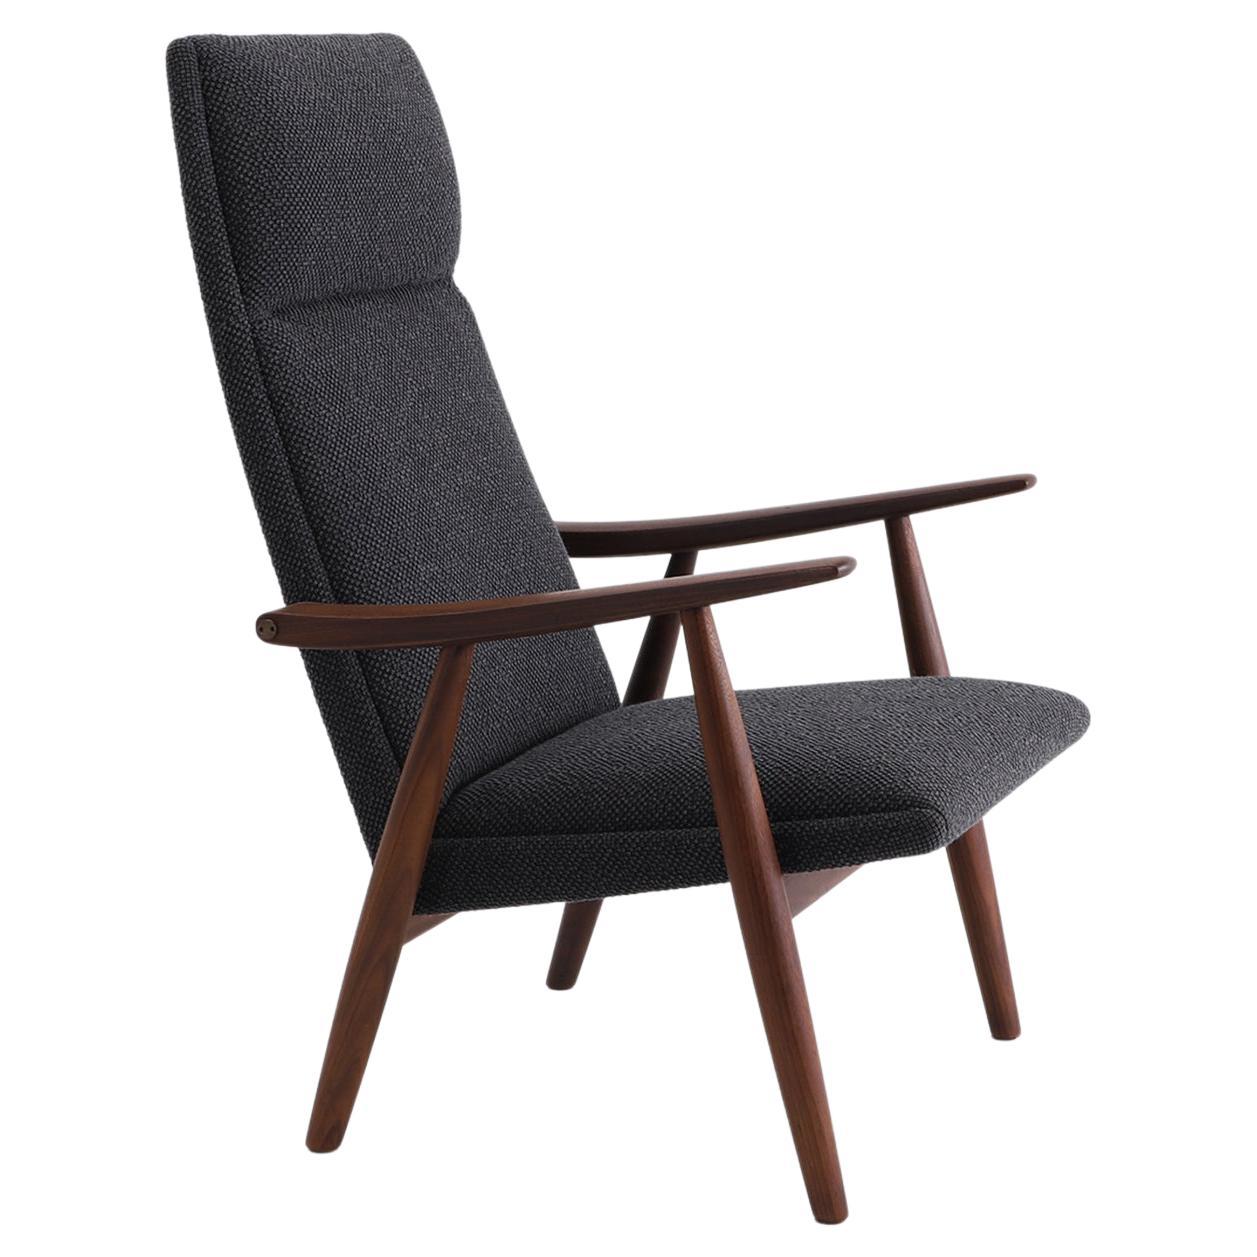 Hans J. Wegner / Easy chair. GE-260A / GETAMA For Sale